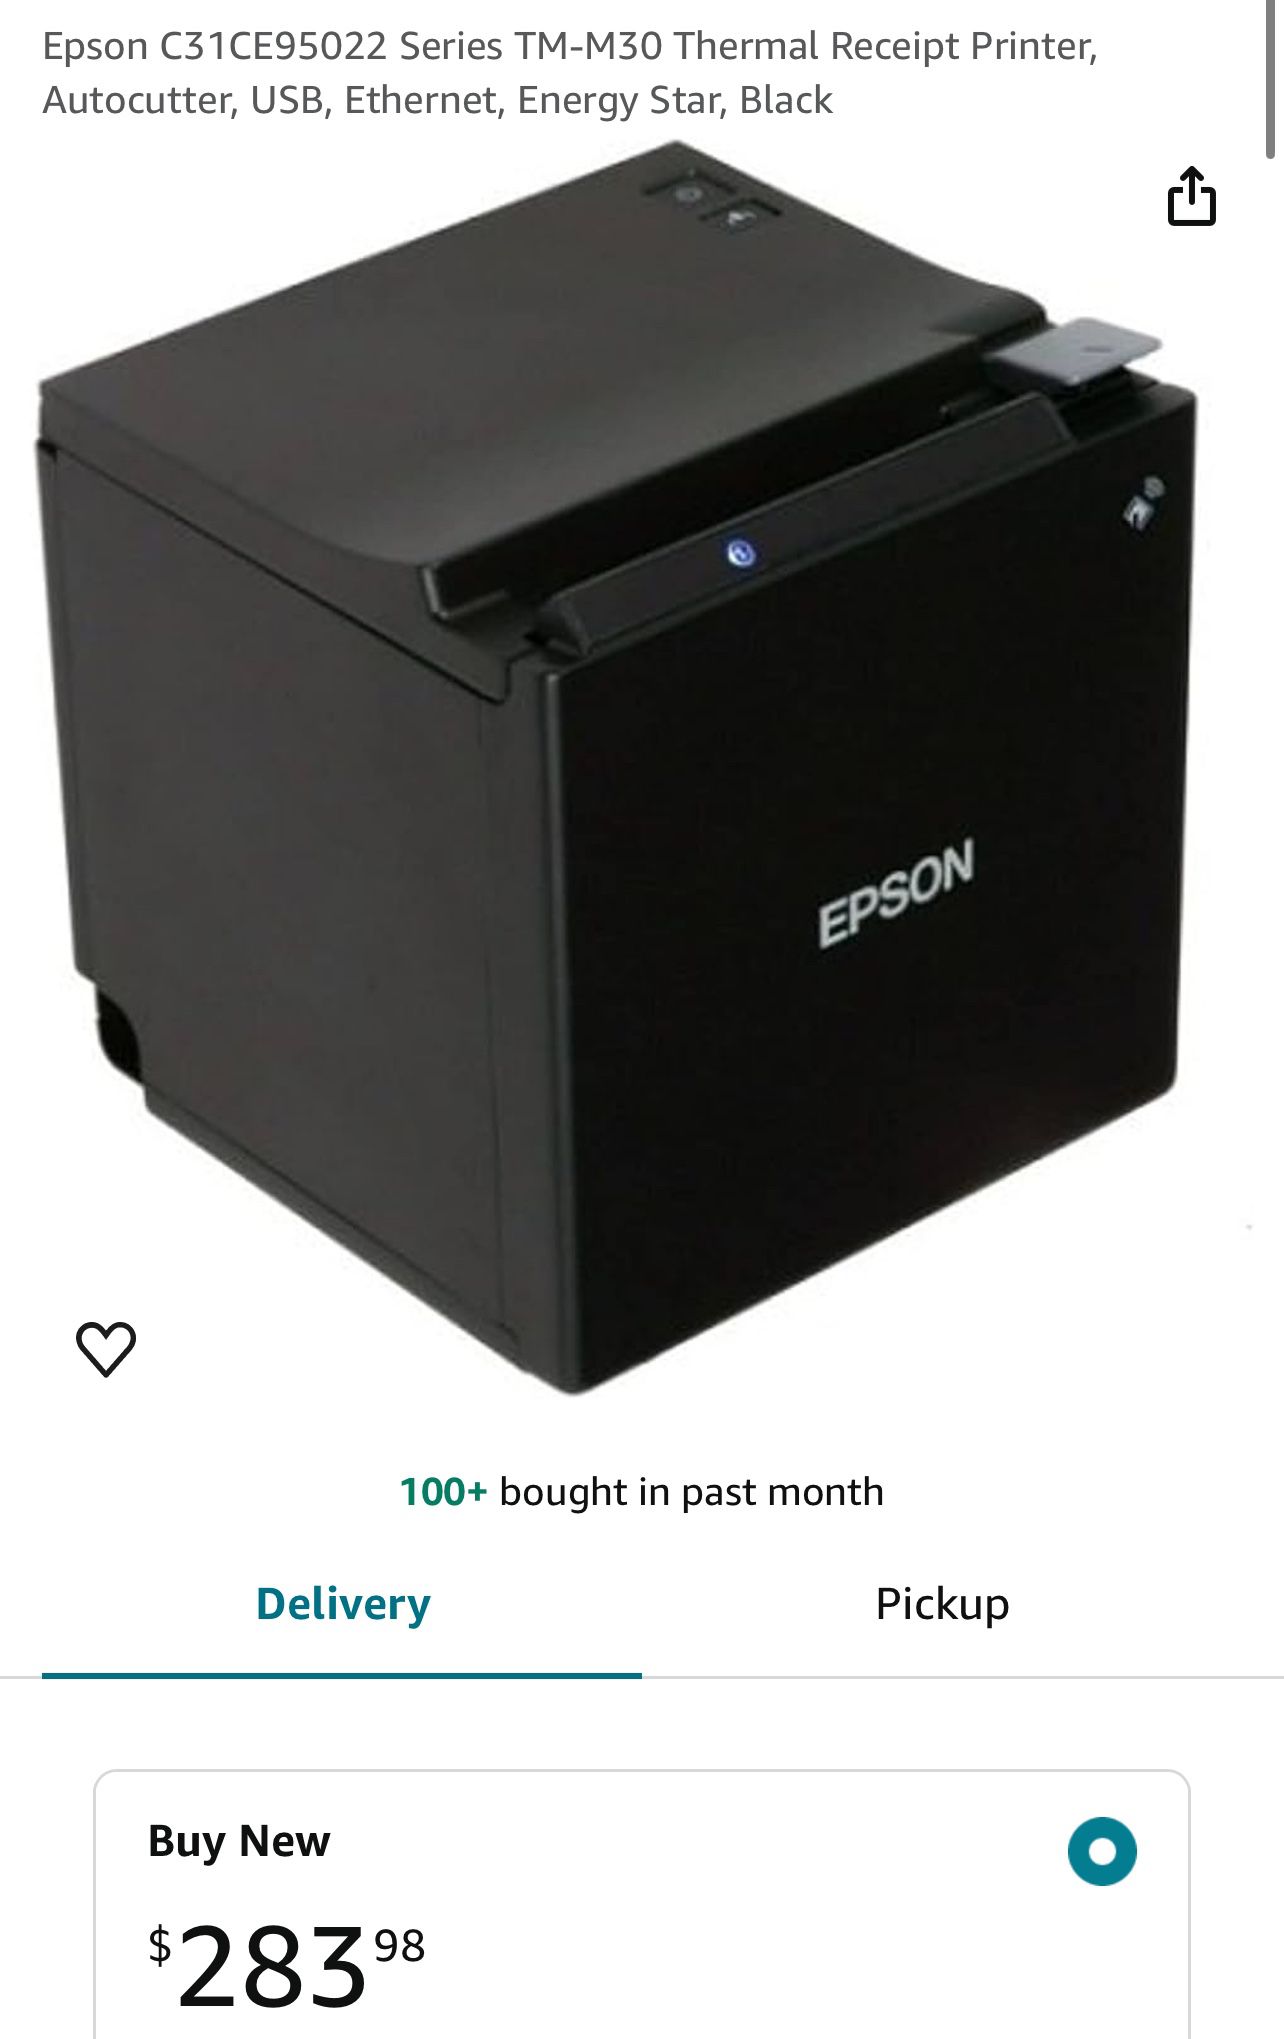 Epson Tm-m30 Thermal POS Printer$200